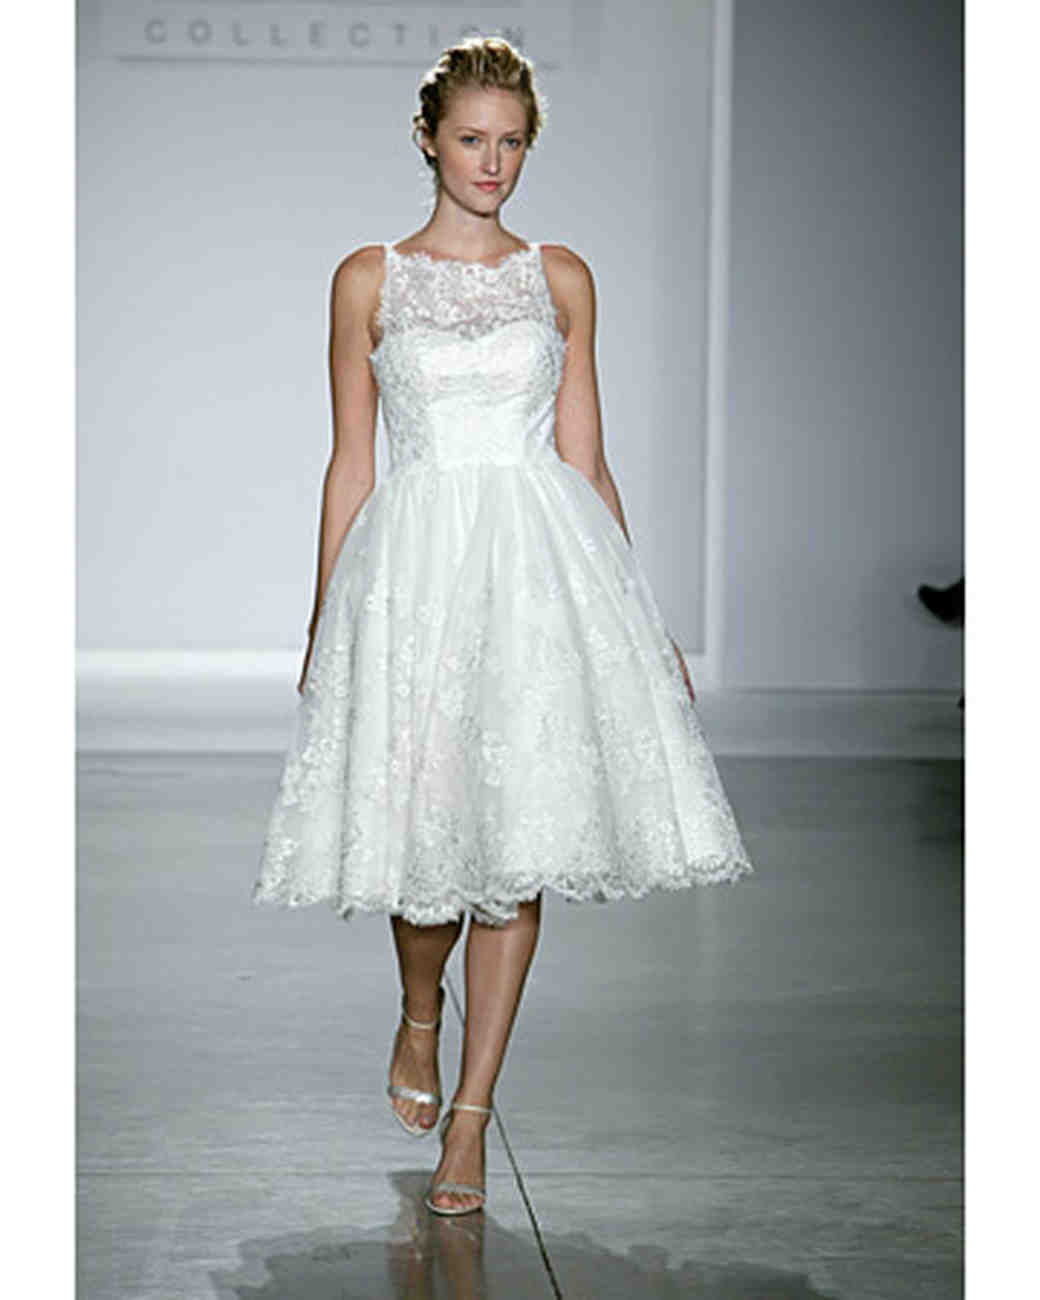 Lace Wedding Gowns and Dresses | Martha Stewart Weddings